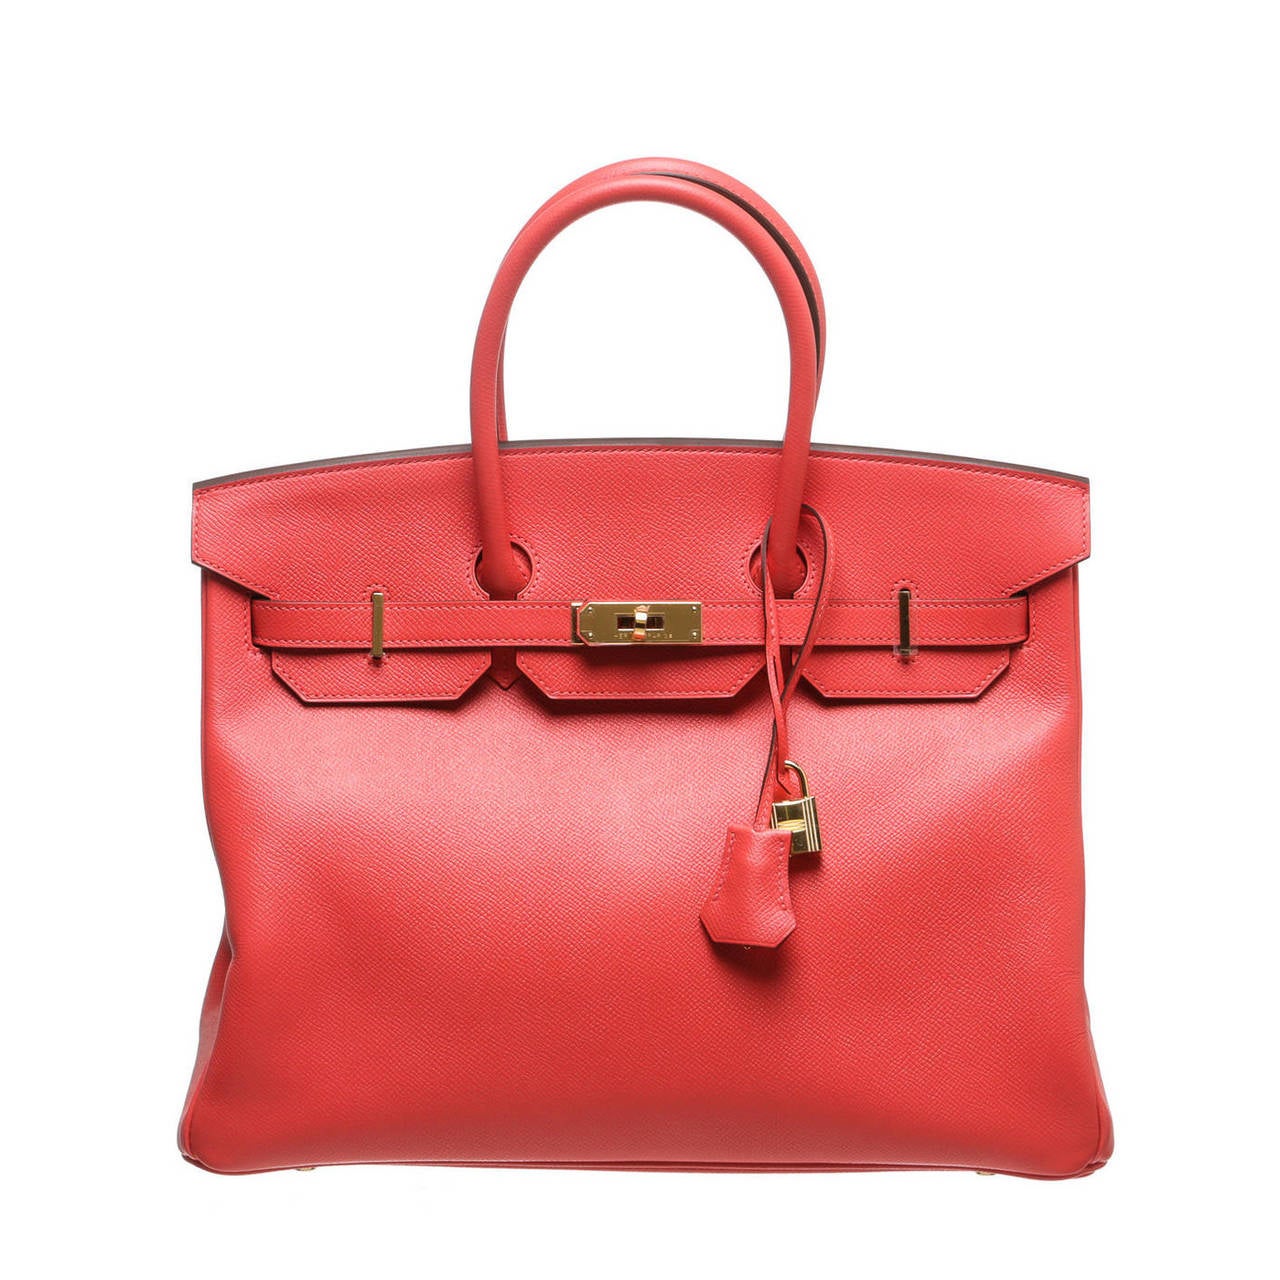 Hermes Rouge Pivoine (Pink) Epsom Leather 35cm Birkin Handbag GHW NEW For Sale